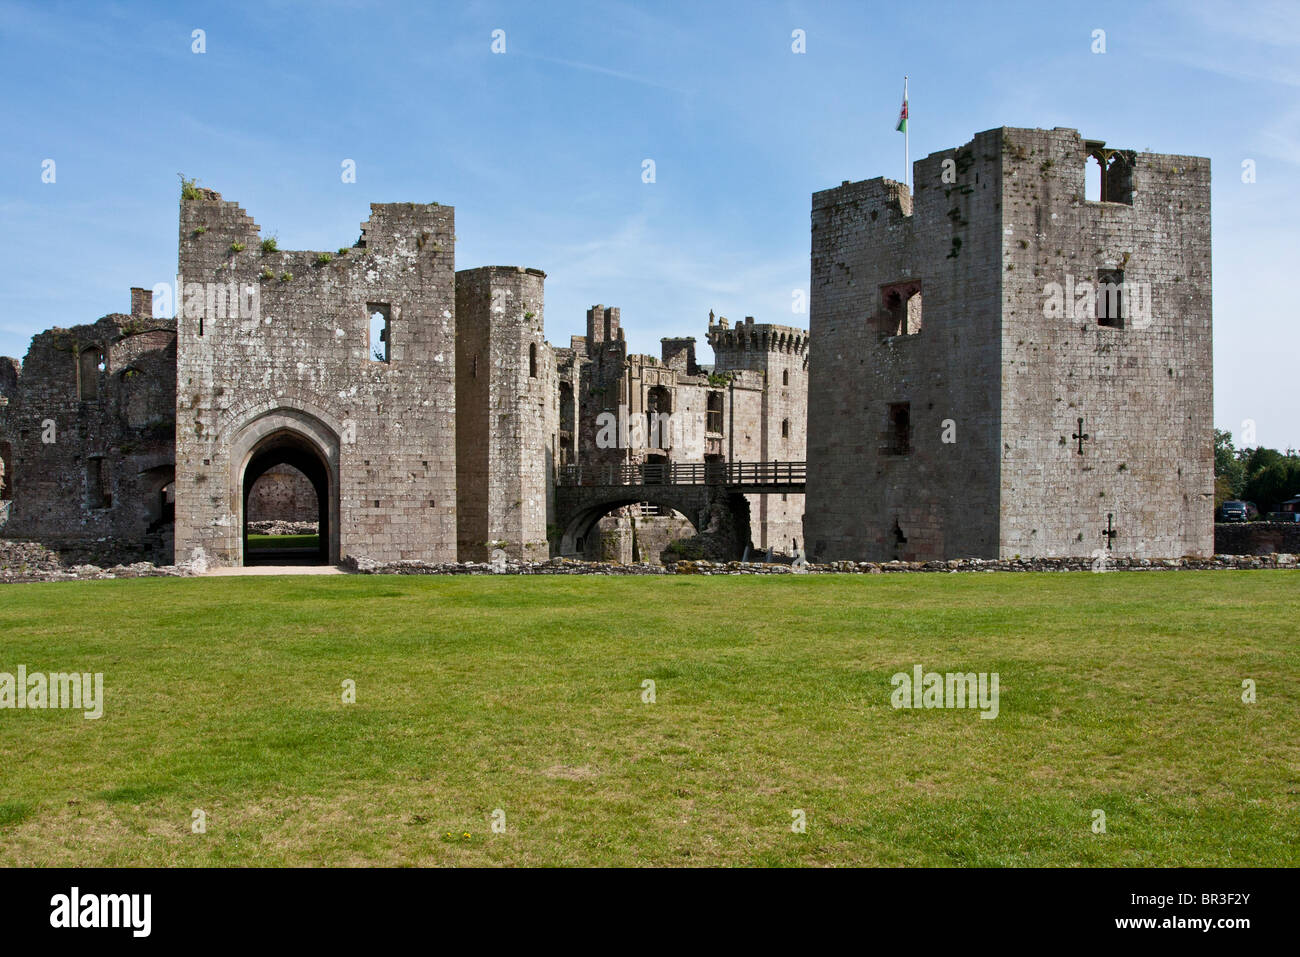 Raglan Castle, Wales - Great Tower Stock Photo